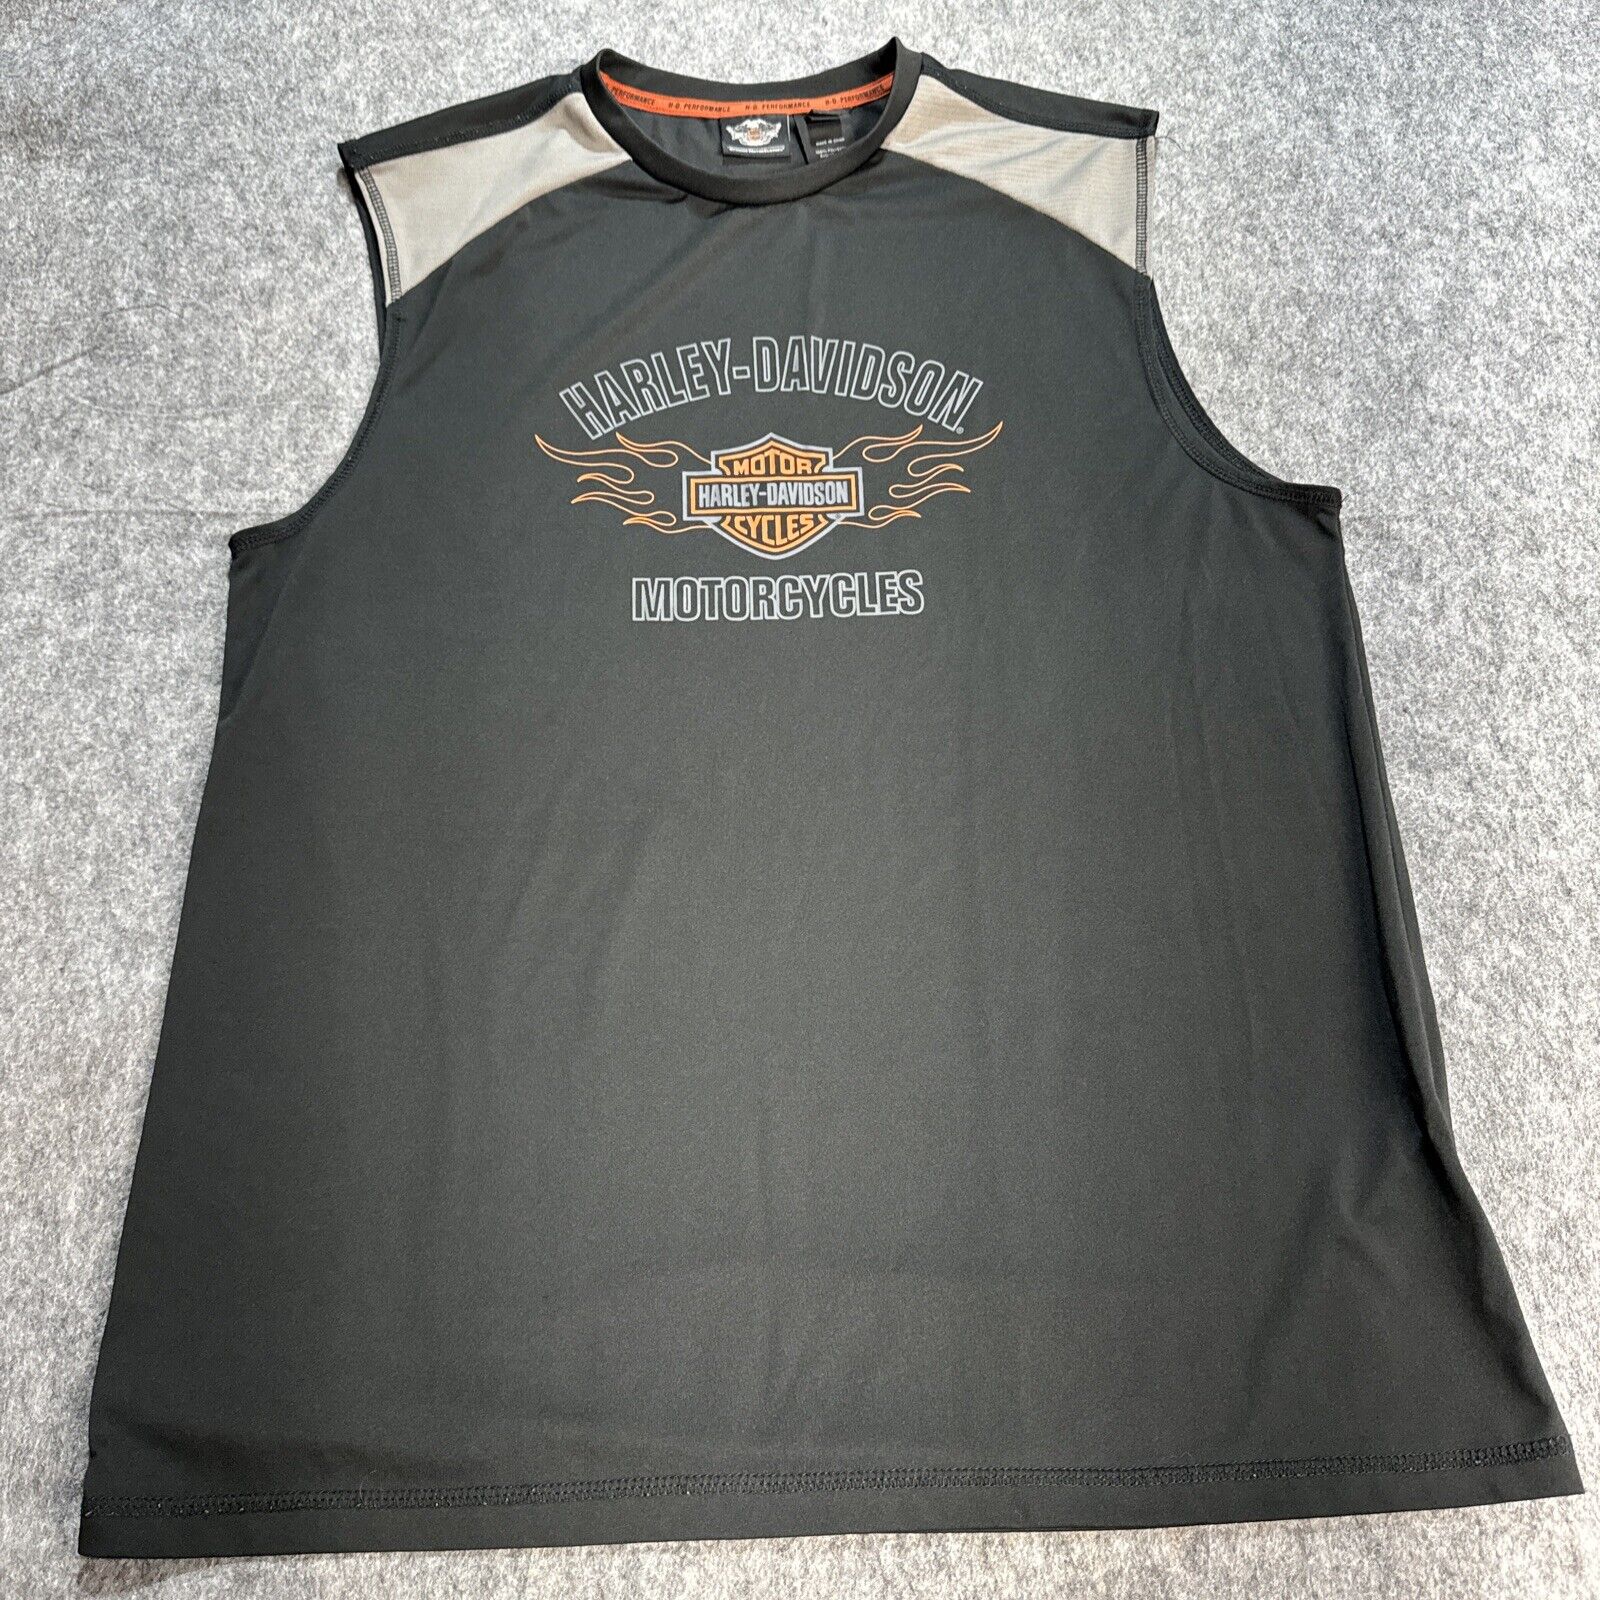 Harley Davison Motorcycles Black Sleeveless Tank Top Shirt XL Performance